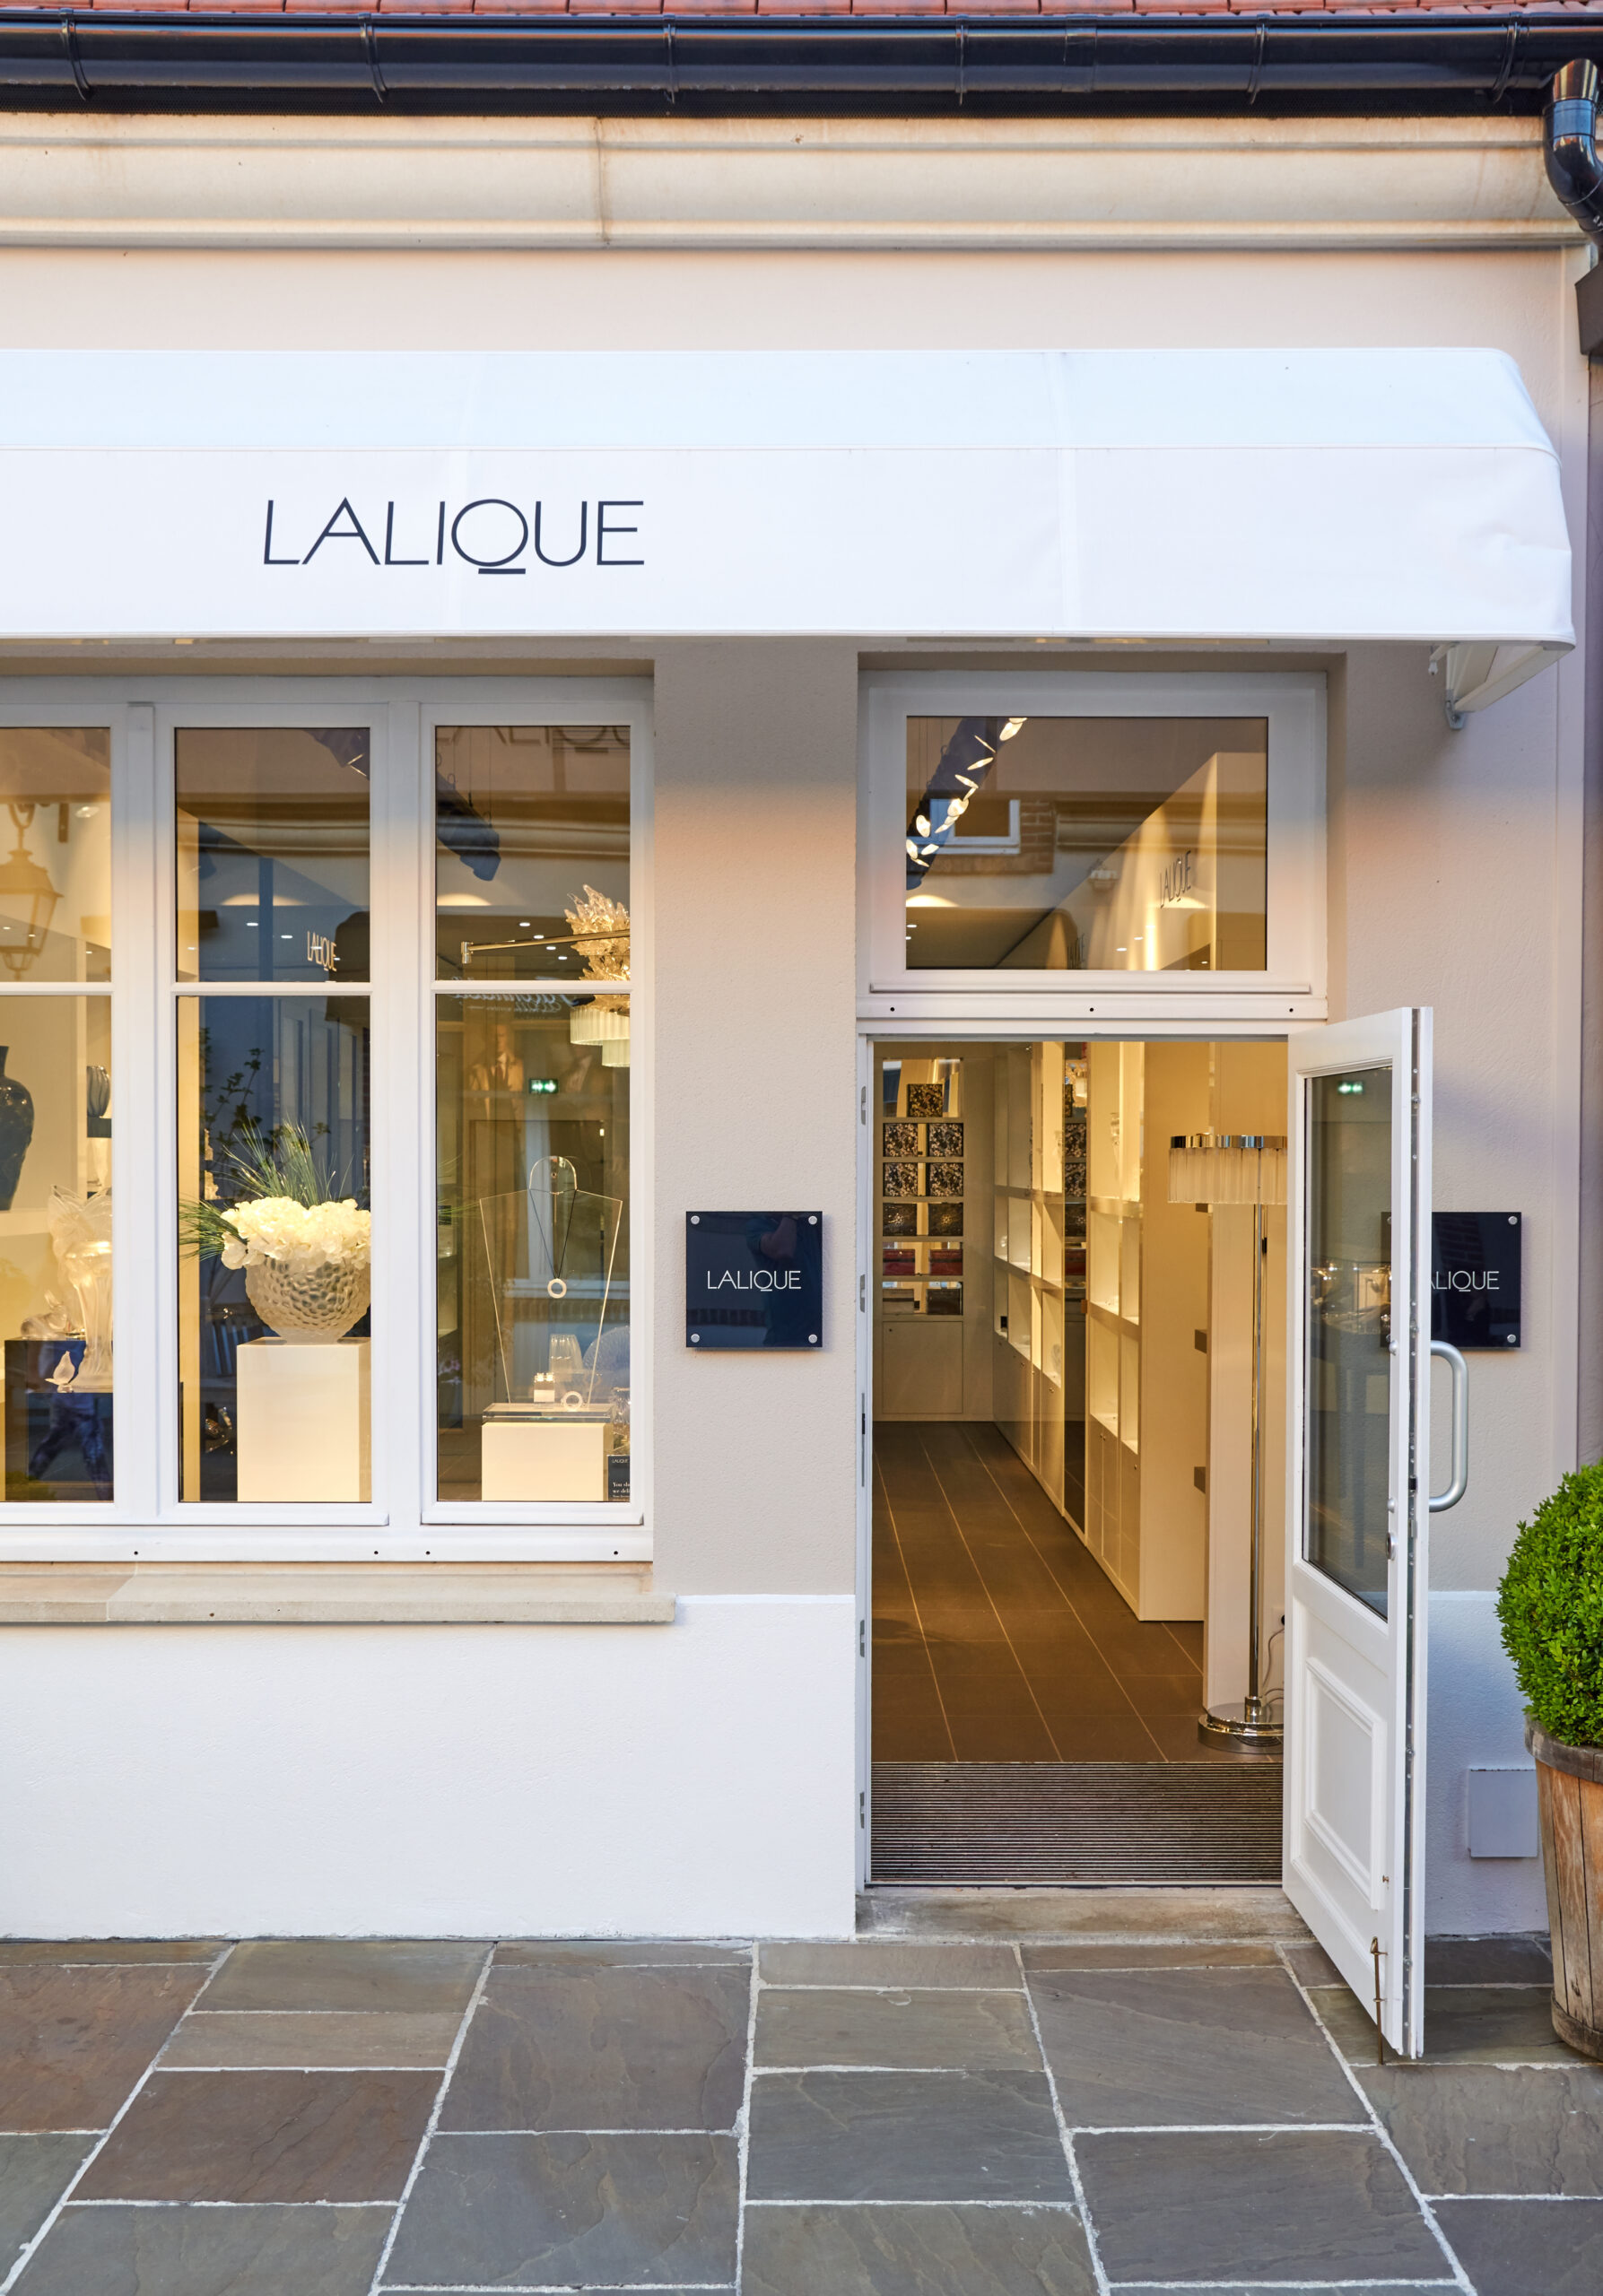 Lalique - historia mistrza szklarstwa